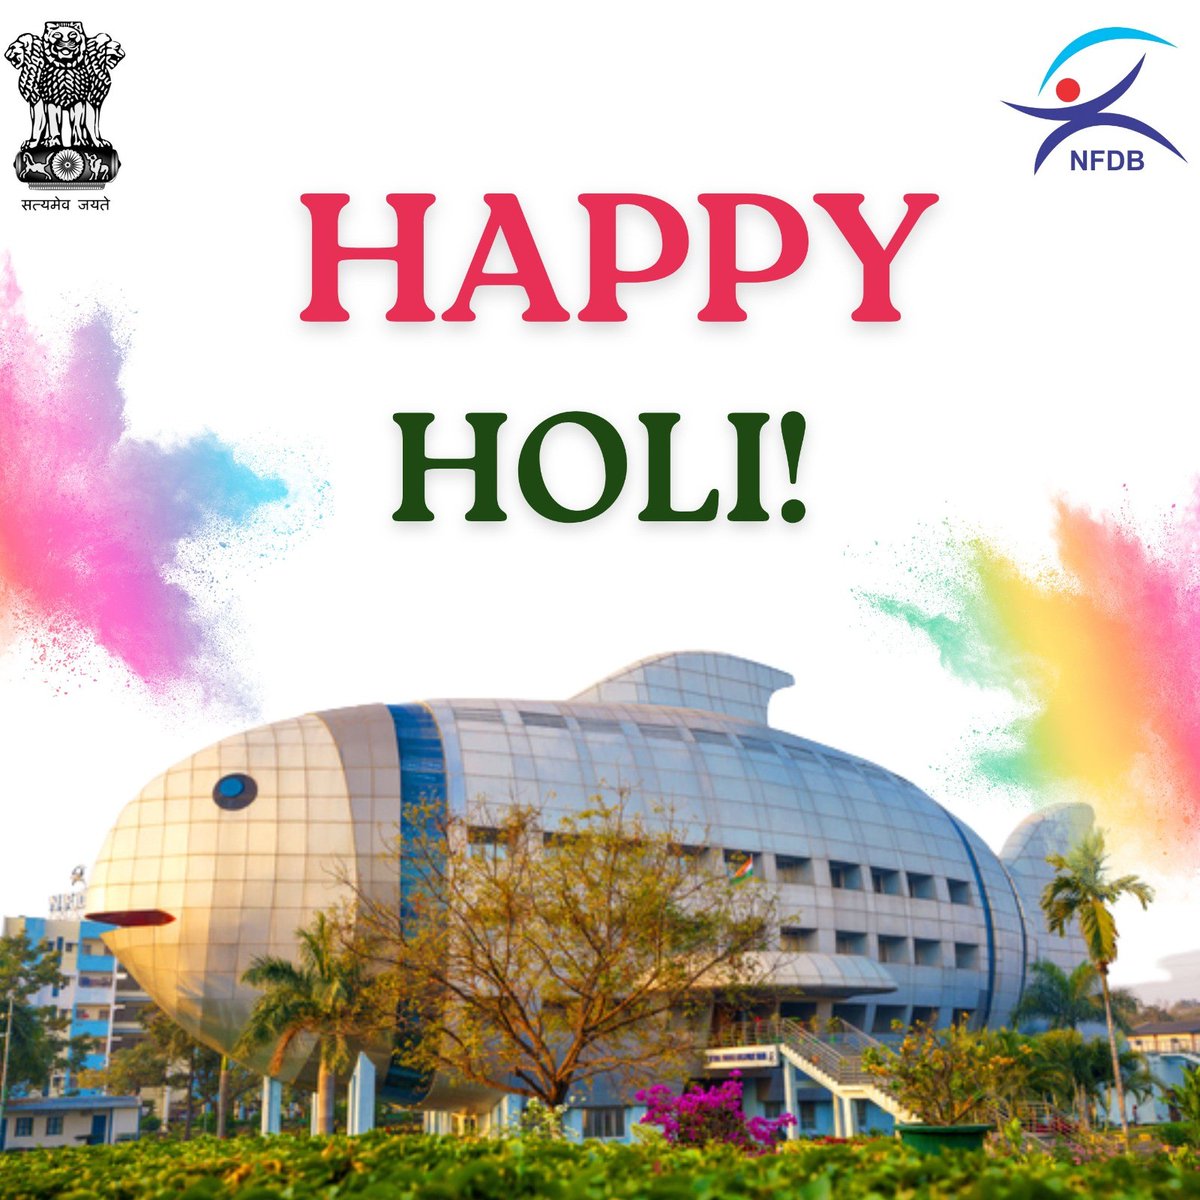 Get ready to splash some colors, spread joy and celebrate the festival of Holi with NFDB! 📷📷 Wishing you all a Happy Holi! #HappyHoli #FestivalOfColors #NFDB #JoyfulCelebration #ColorfulVibes